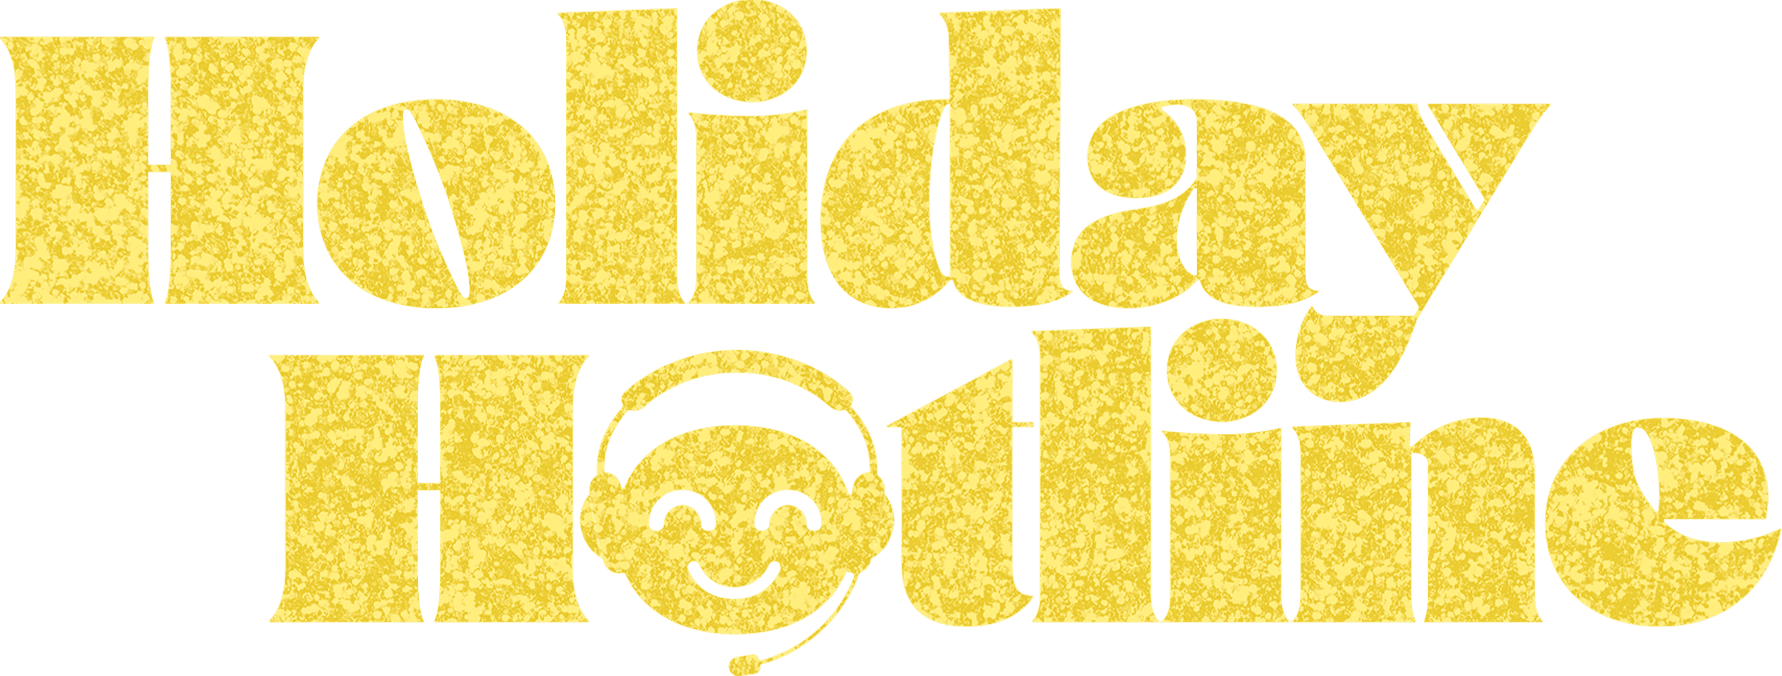 Holiday Hotline logo